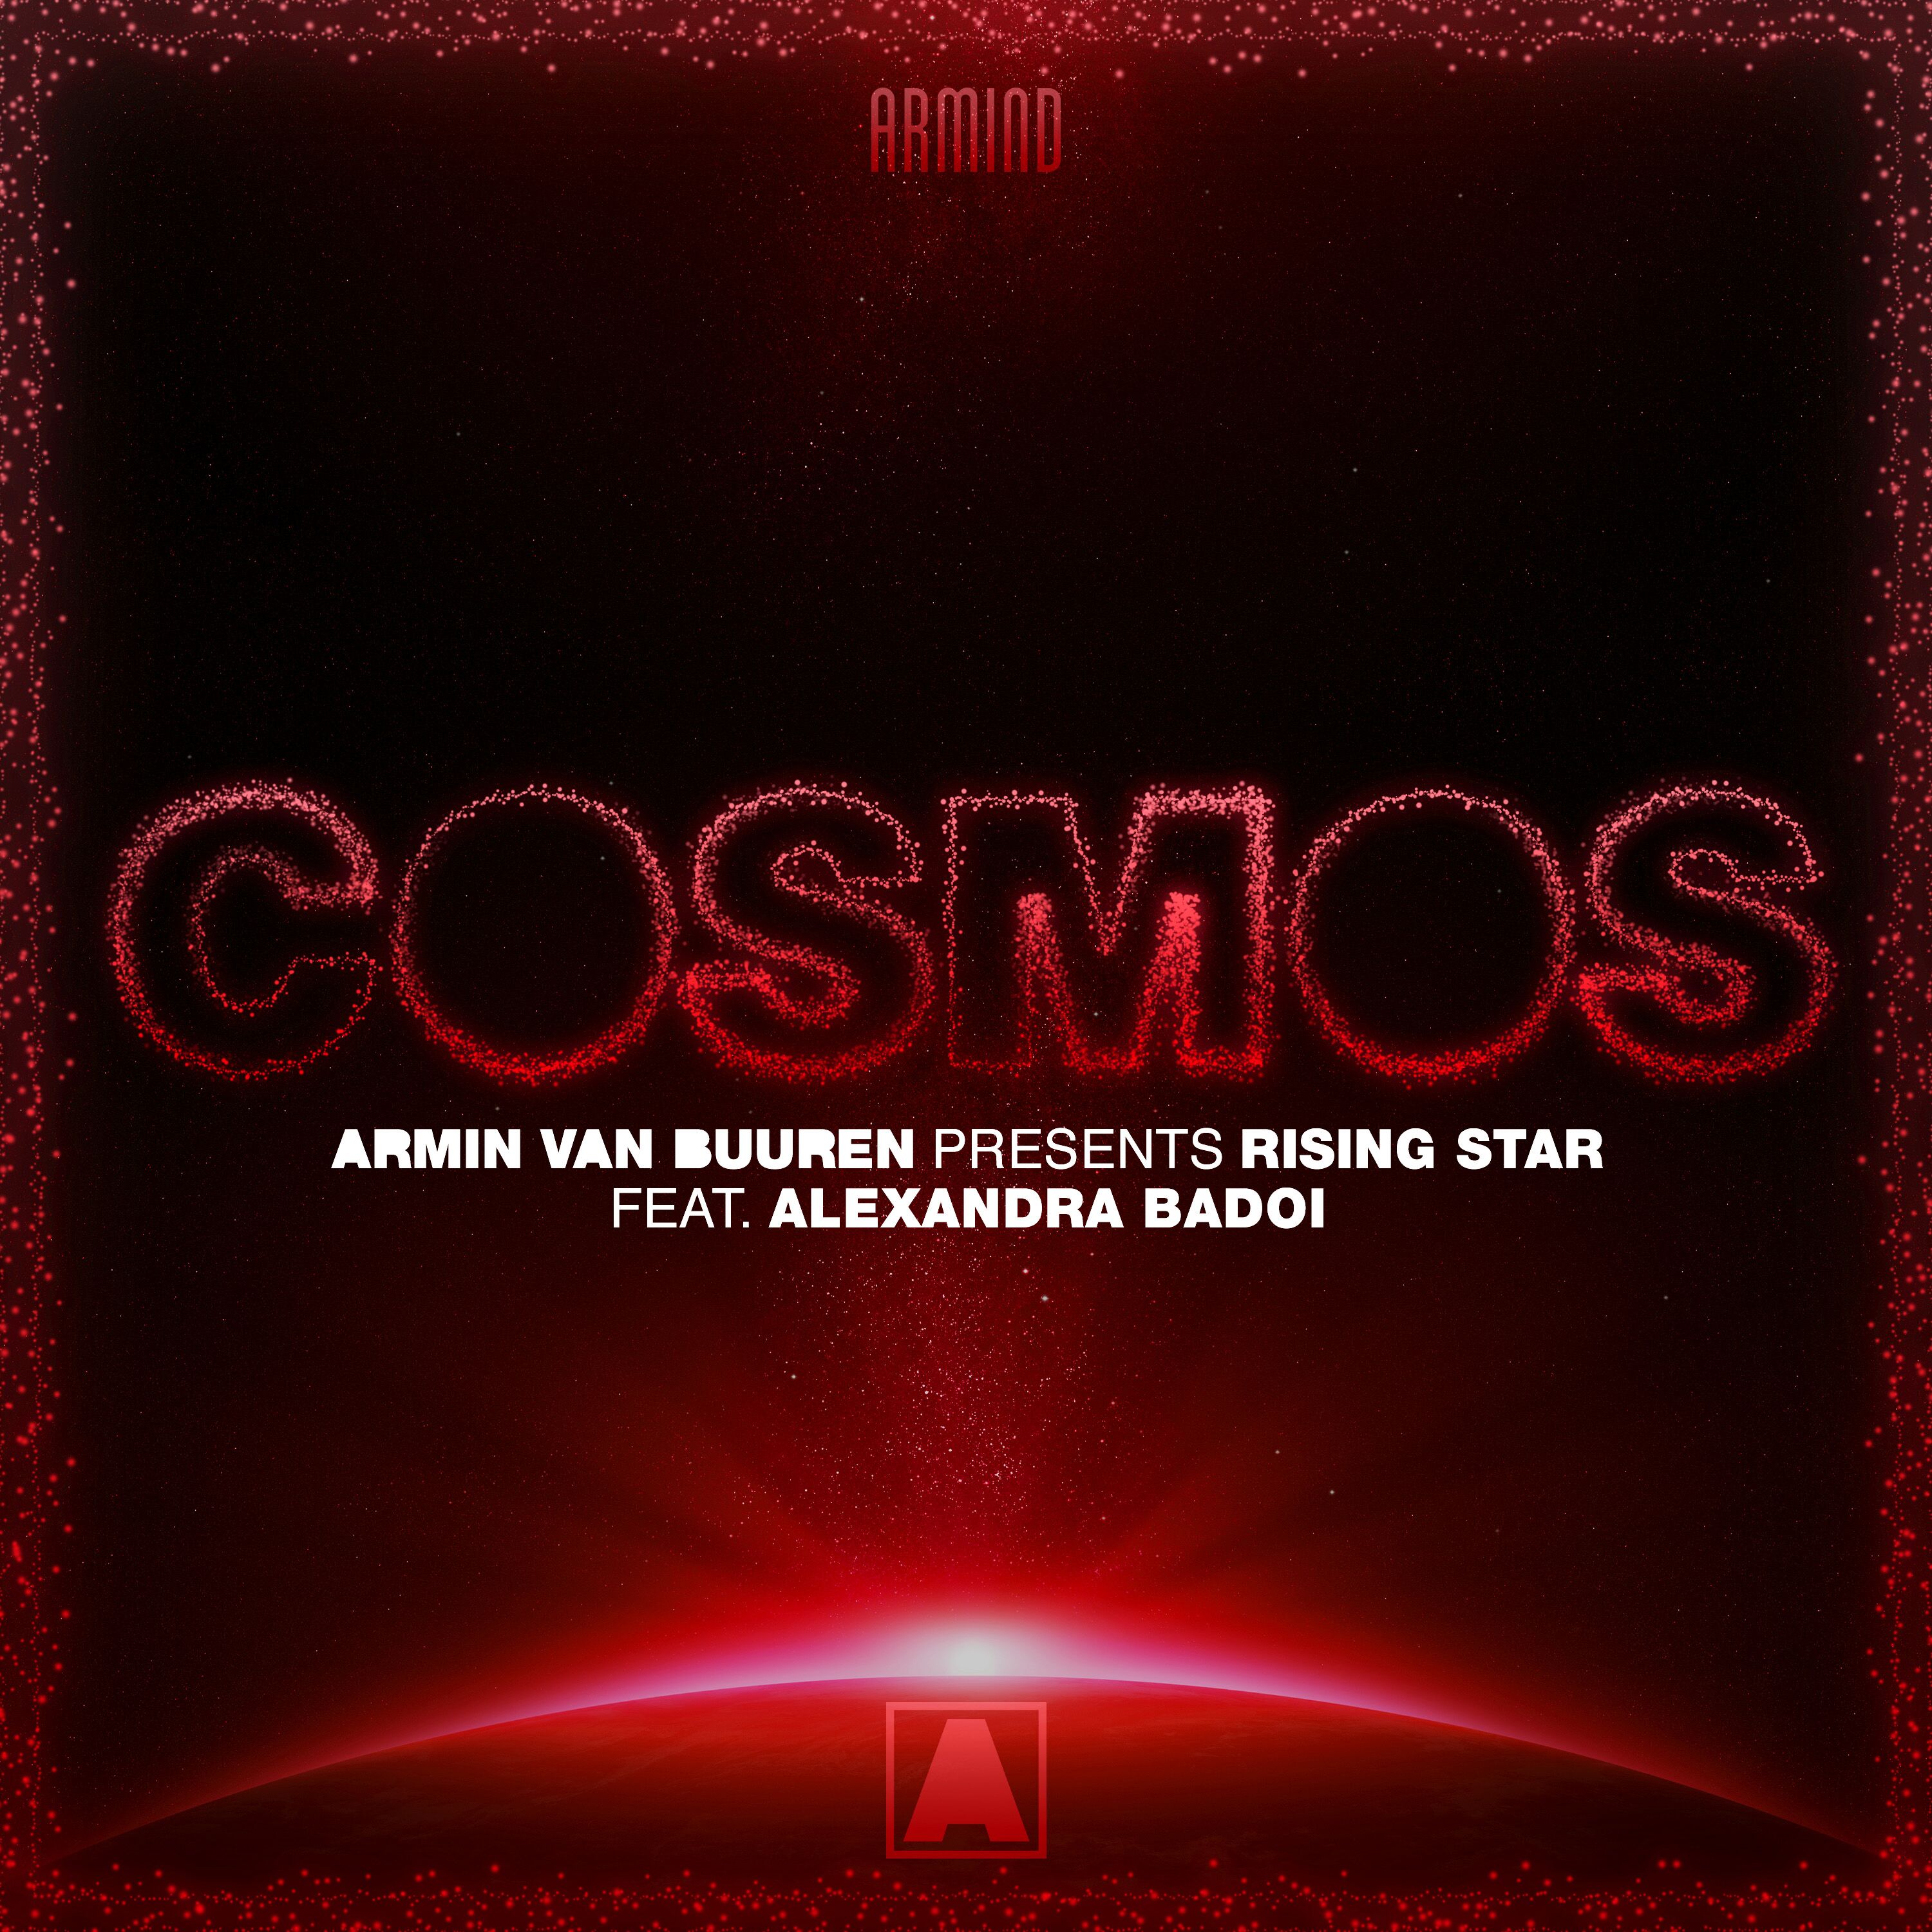 Armin van Buuren presents Rising Star feat. Alexandra Badoi presents Cosmos on Armada Music